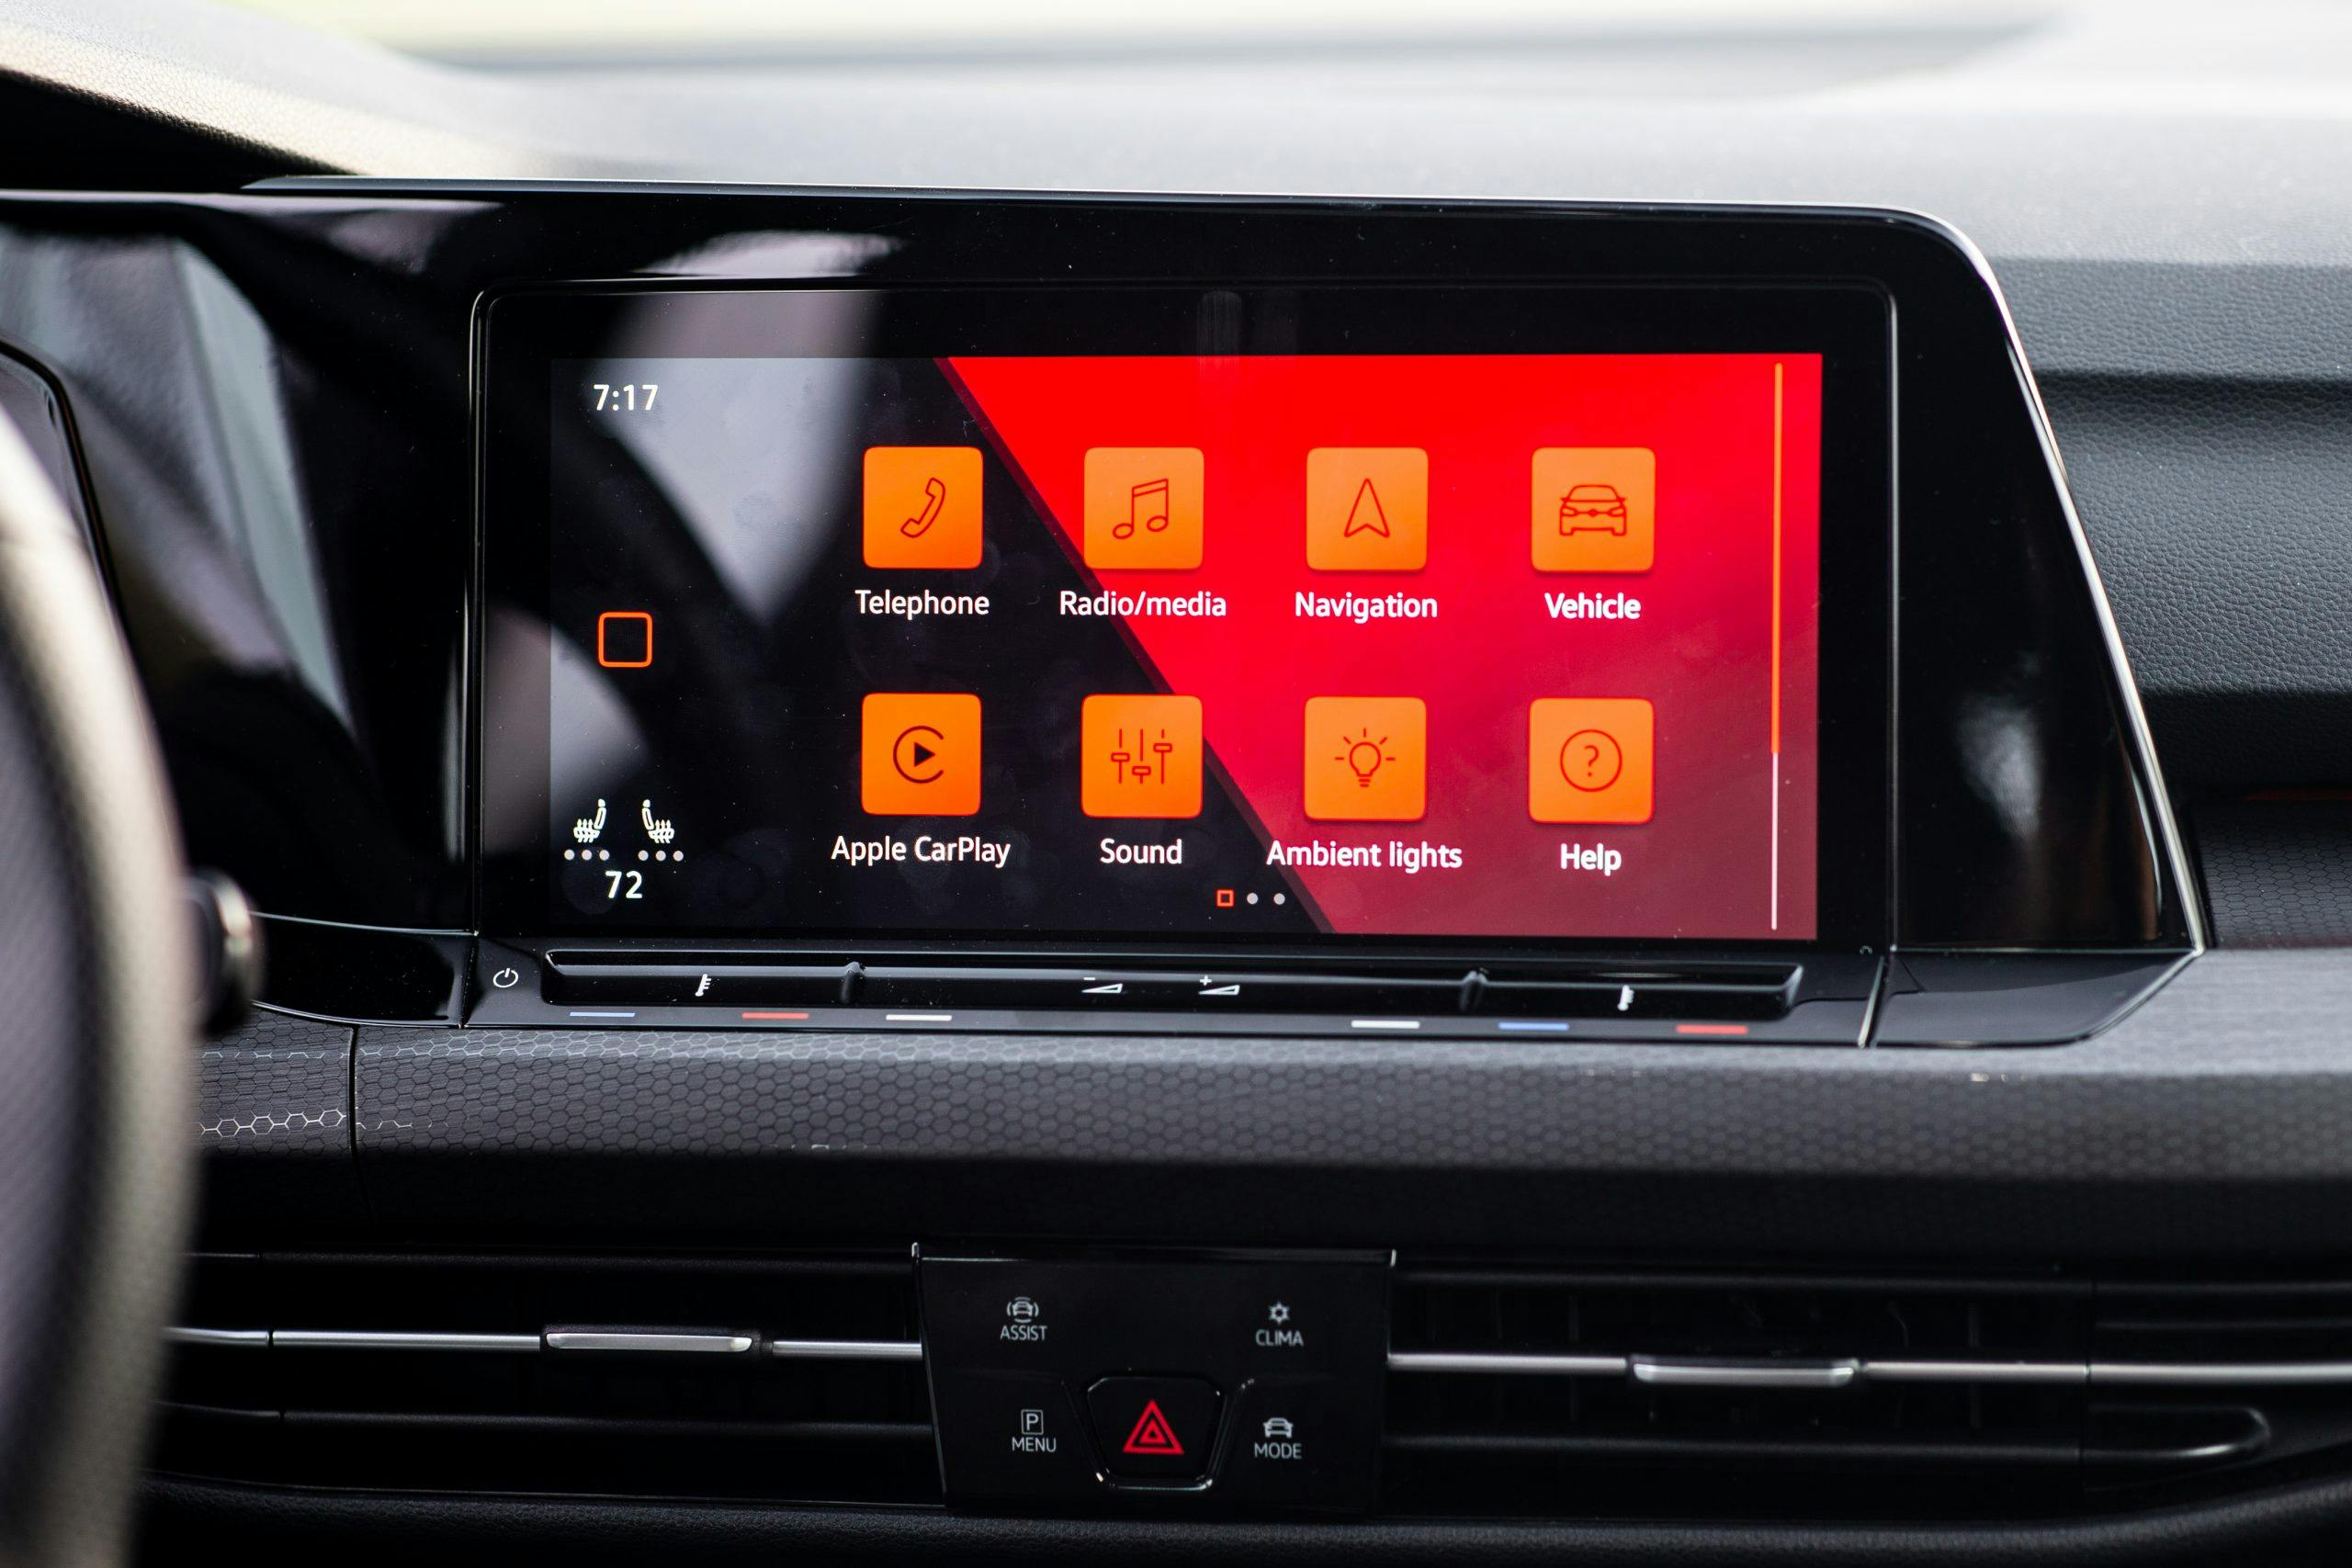 2022 VW GTI mk8 interior infotainment screen